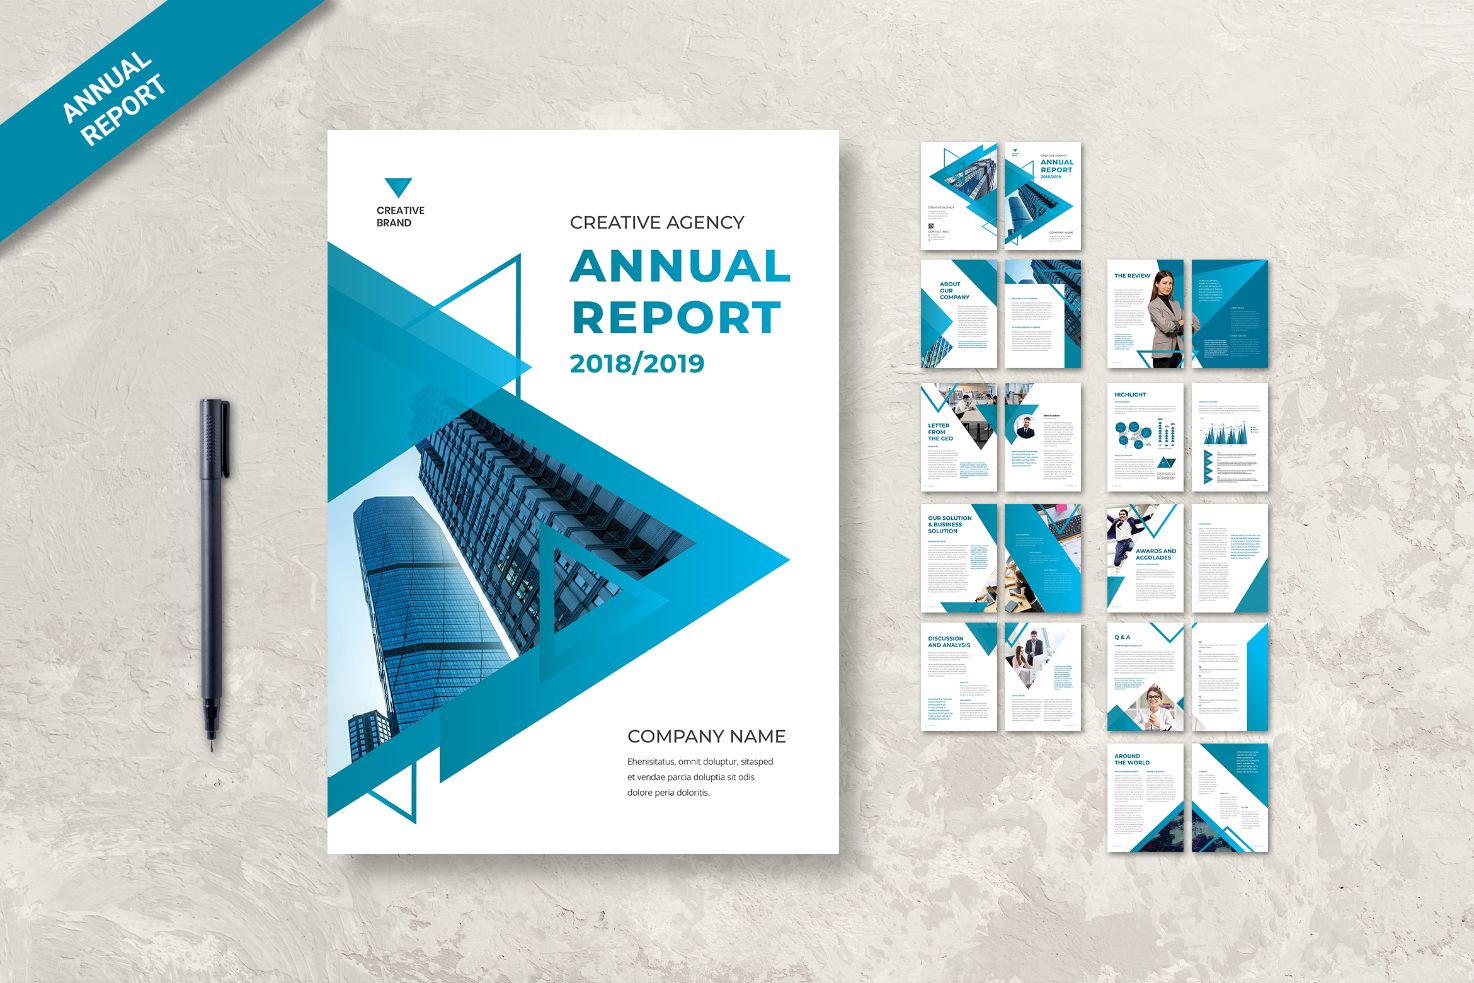 Best Annual Report Template Designs - Blue and White Modern Geometric Design